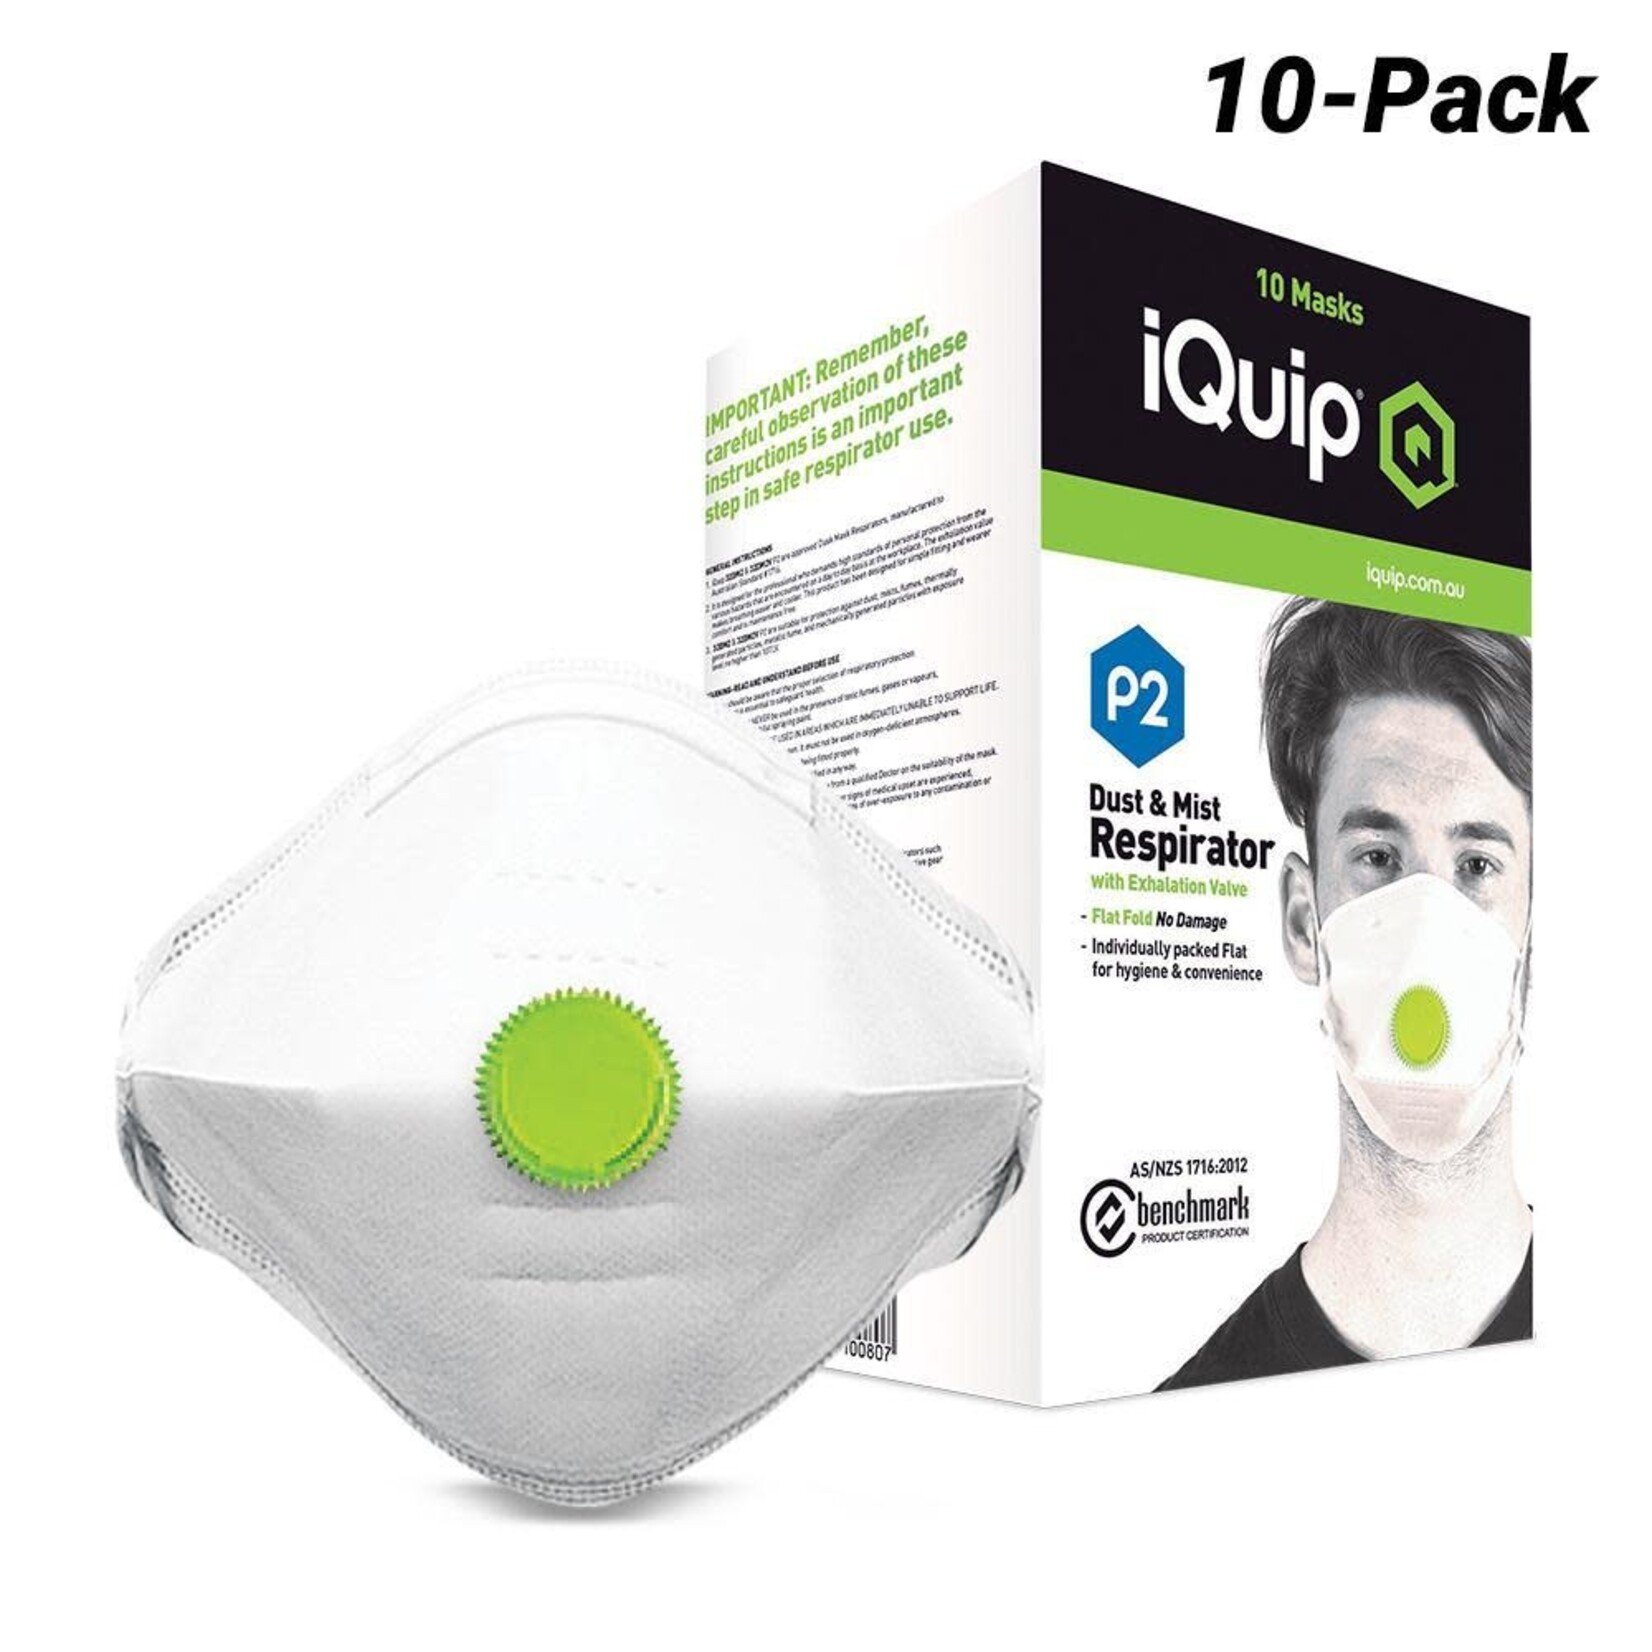 iQuip iQuip Dust & Mist Mask Flat Fold P2 With Valve 10Pcs